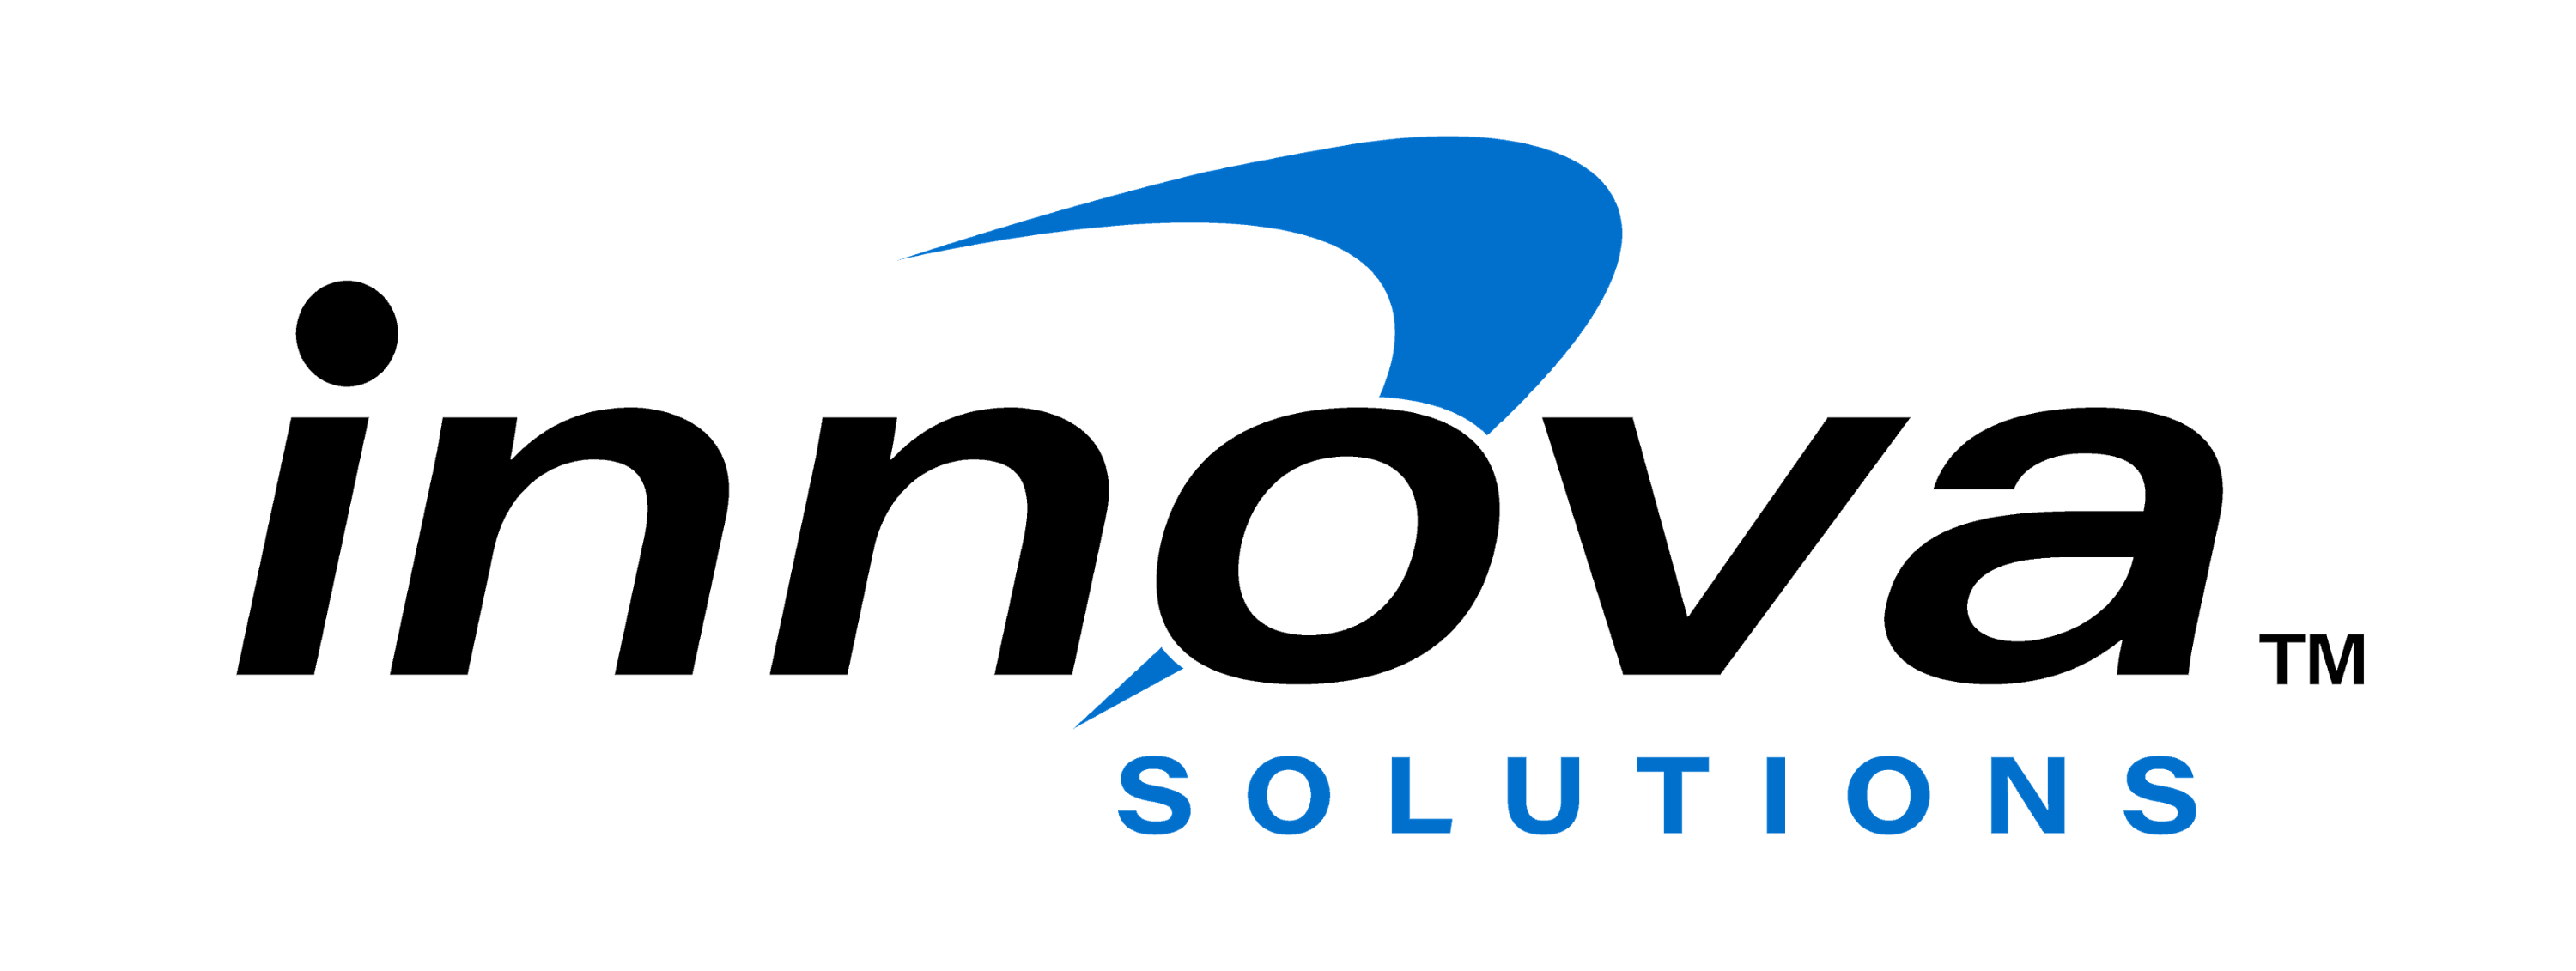 Innova Solutions (Tech services company) logo